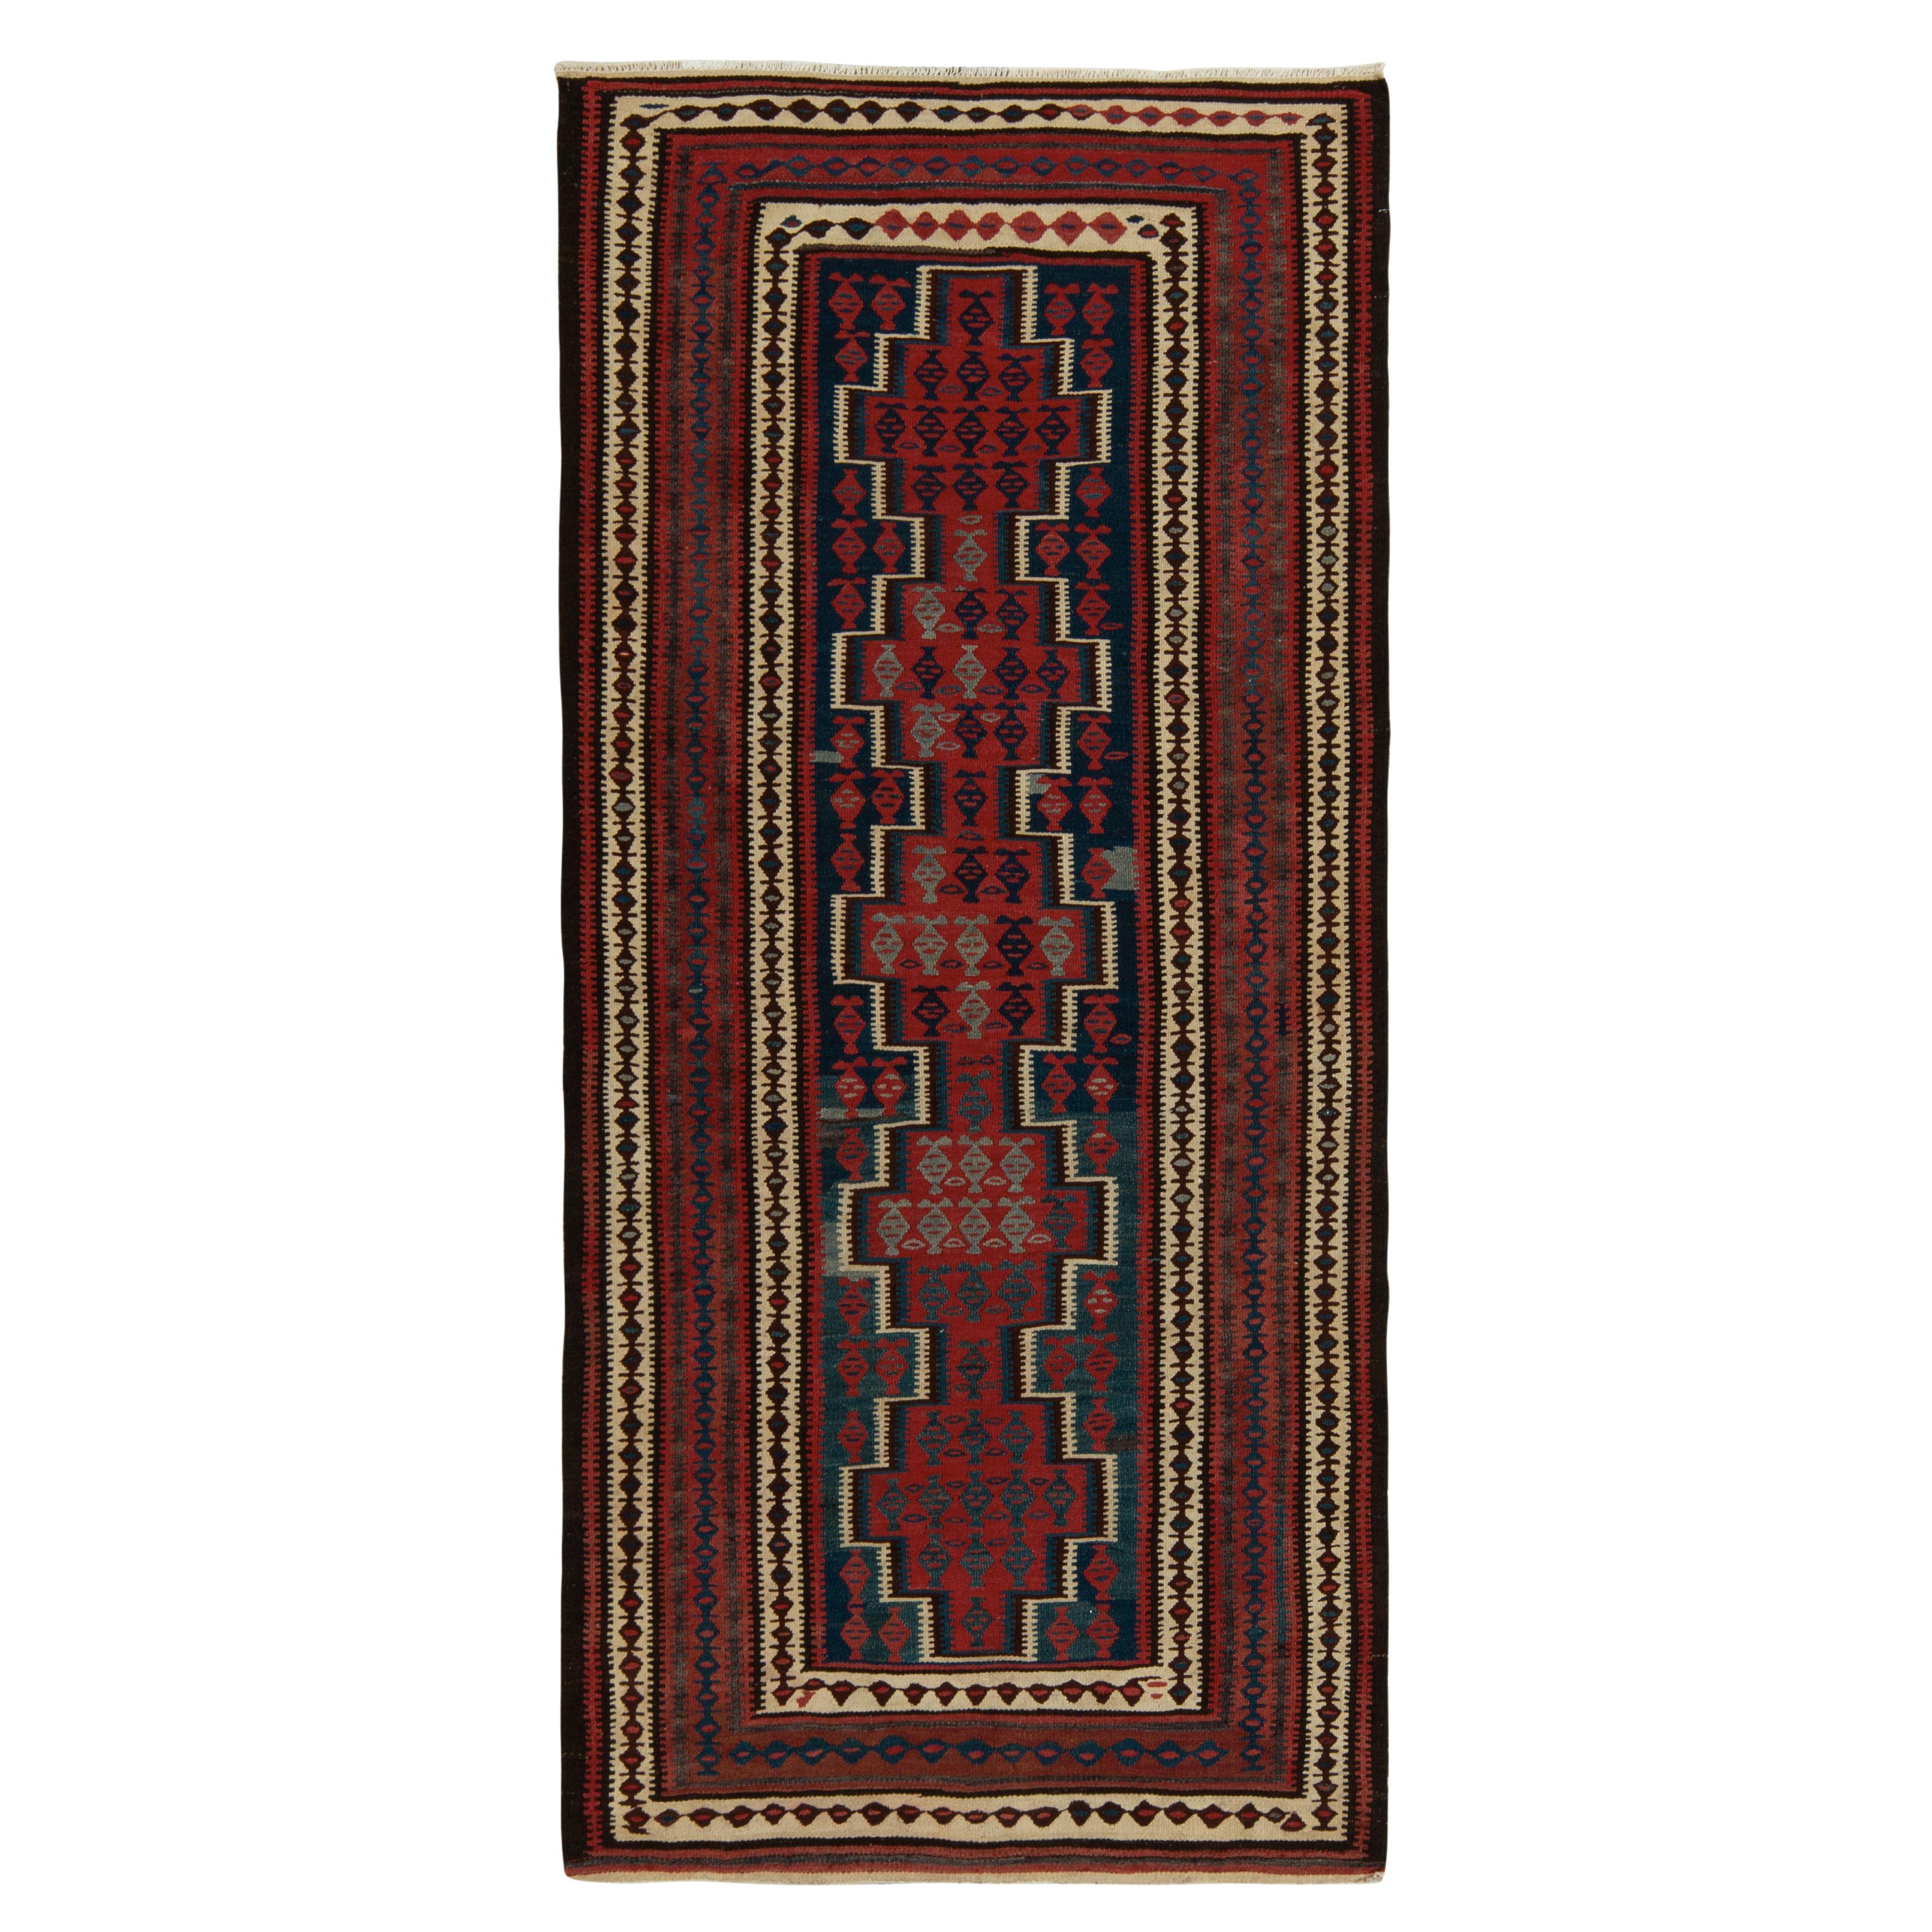 1950s Vintage Kilim rug in Red, Blue and Brown Geometric Patterns by Rug & Kilim For Sale